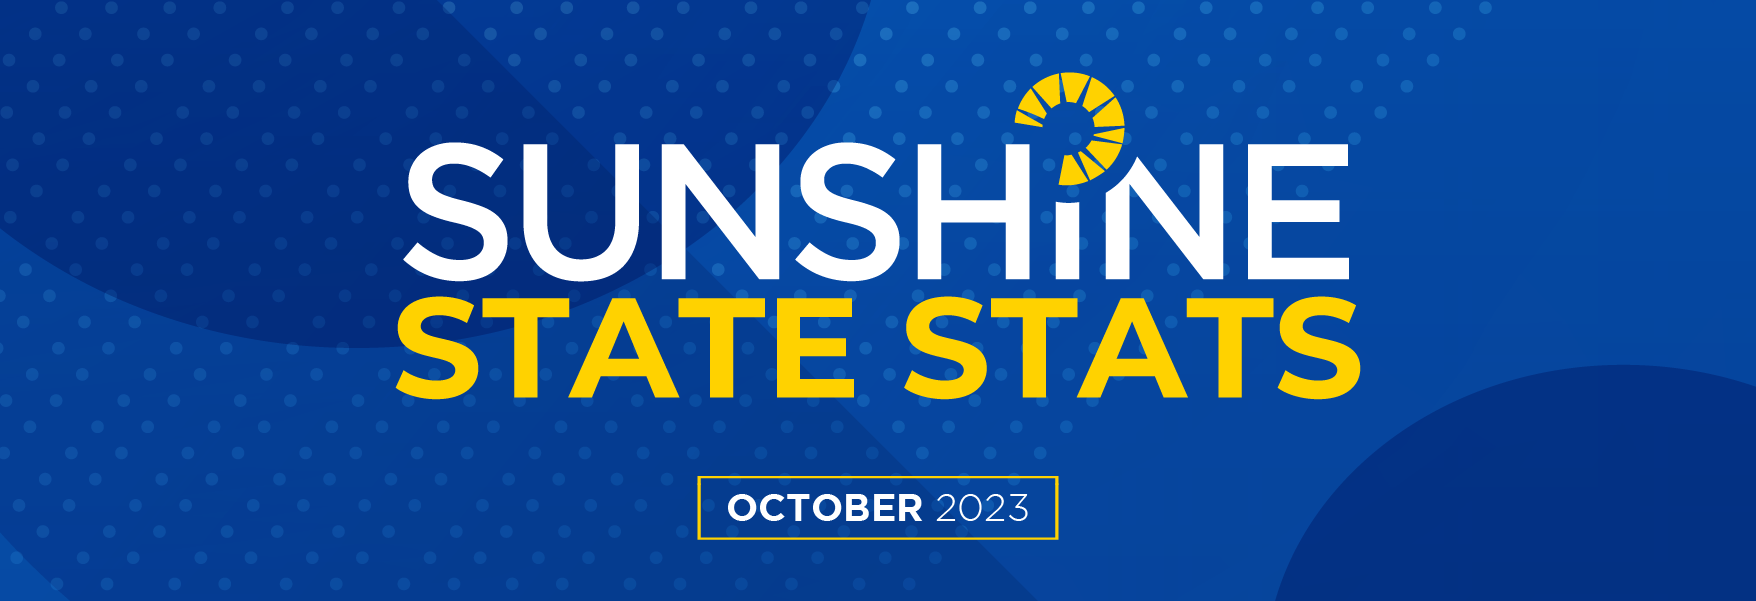 October 2023 Sunshine State Stats